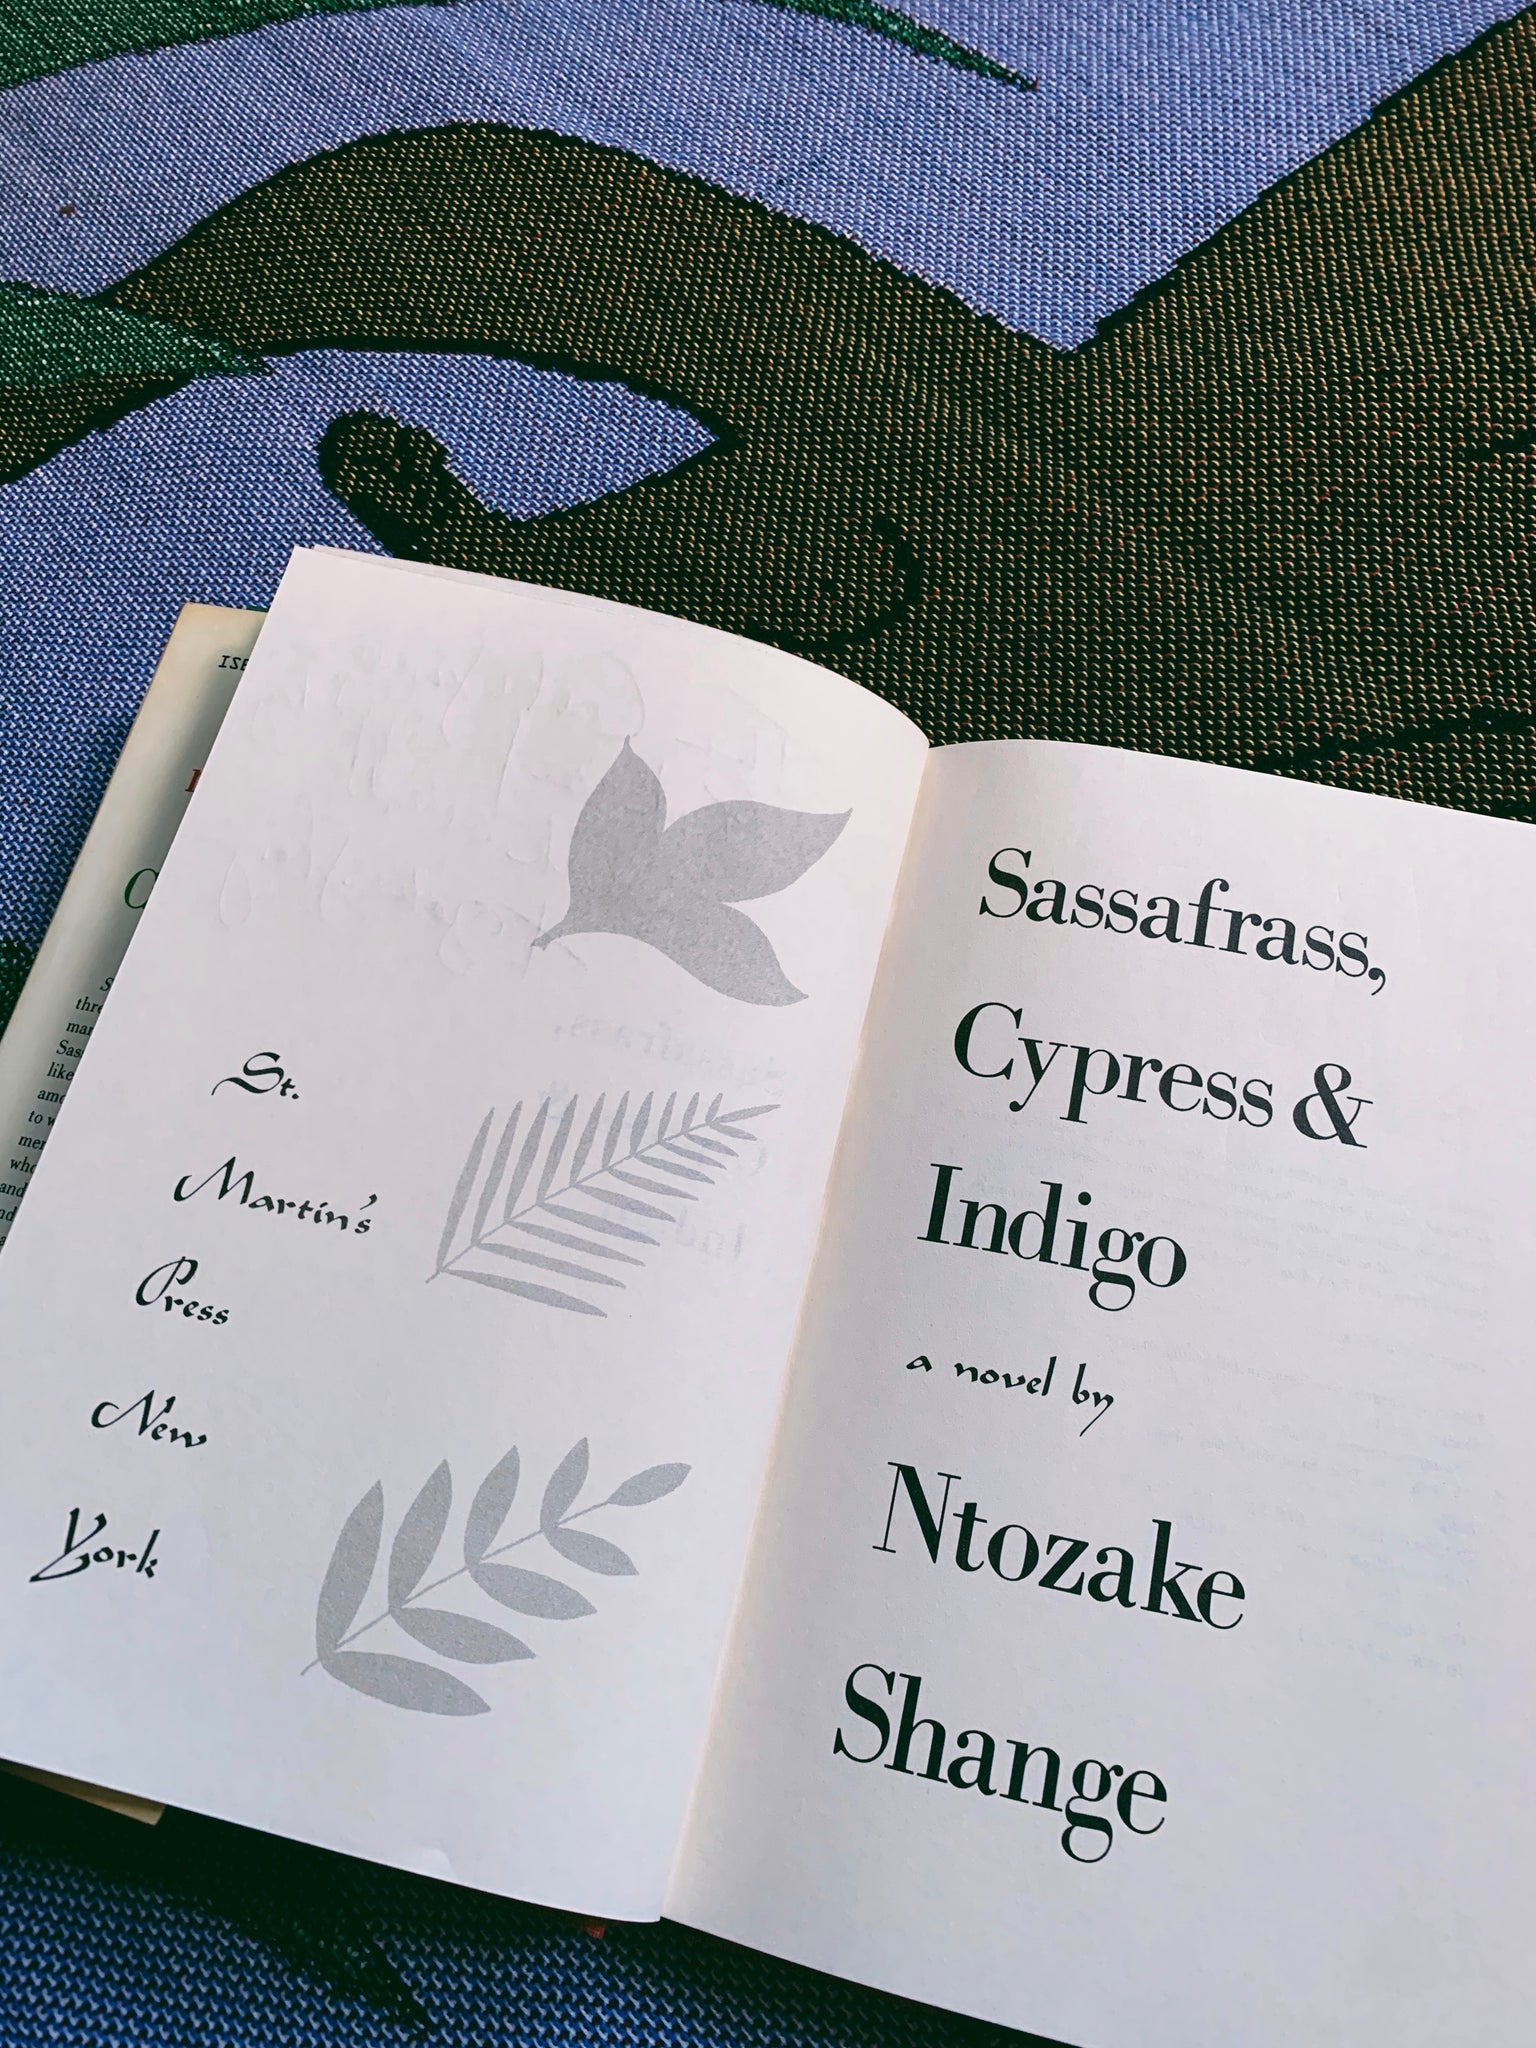 RESERVED: Vintage SIGNED Hardcover “Sassafrass, Cypress & Indigo” by Ntozake Shange (1982)